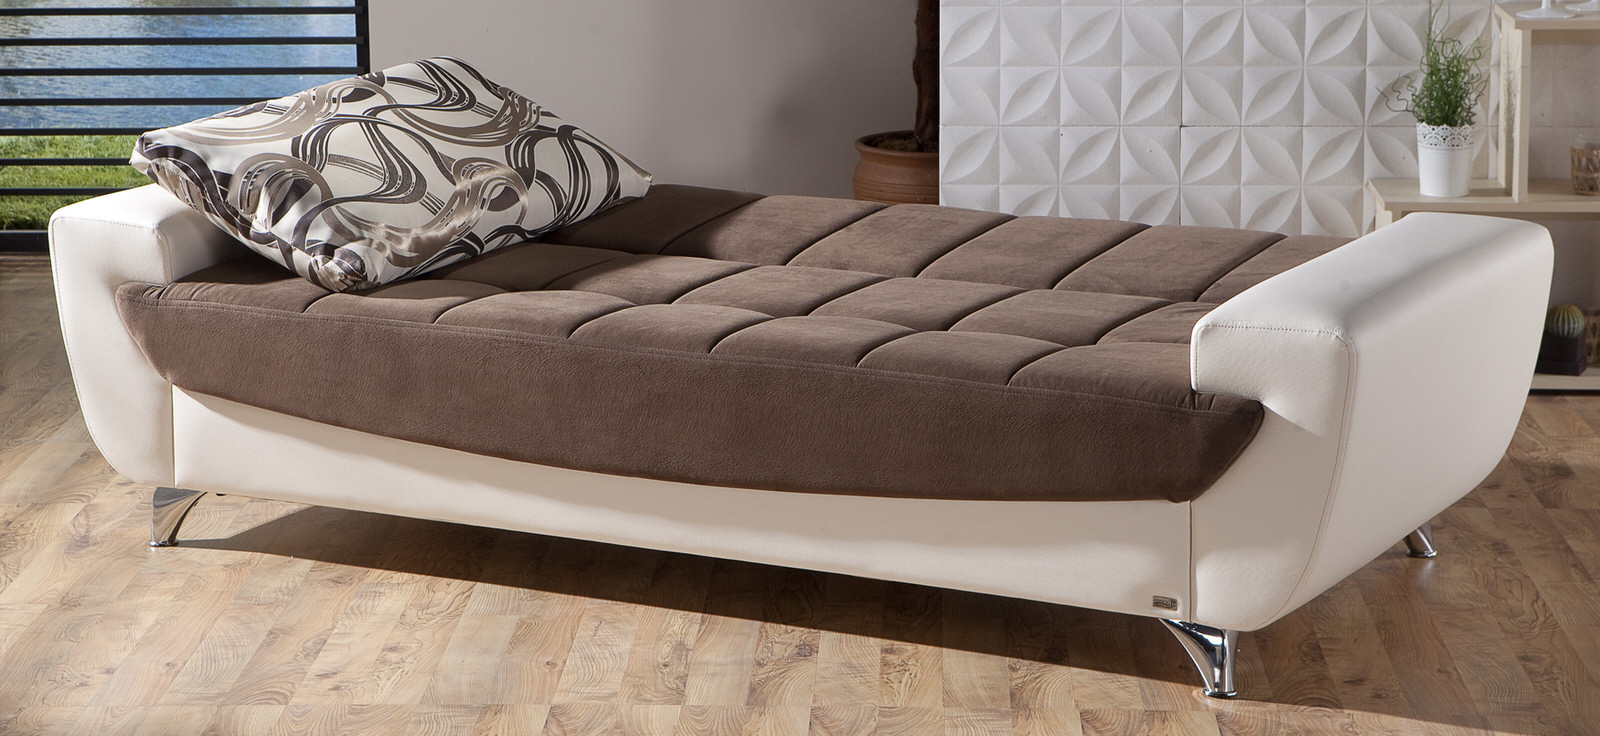 buy cheap sofa beds online uk